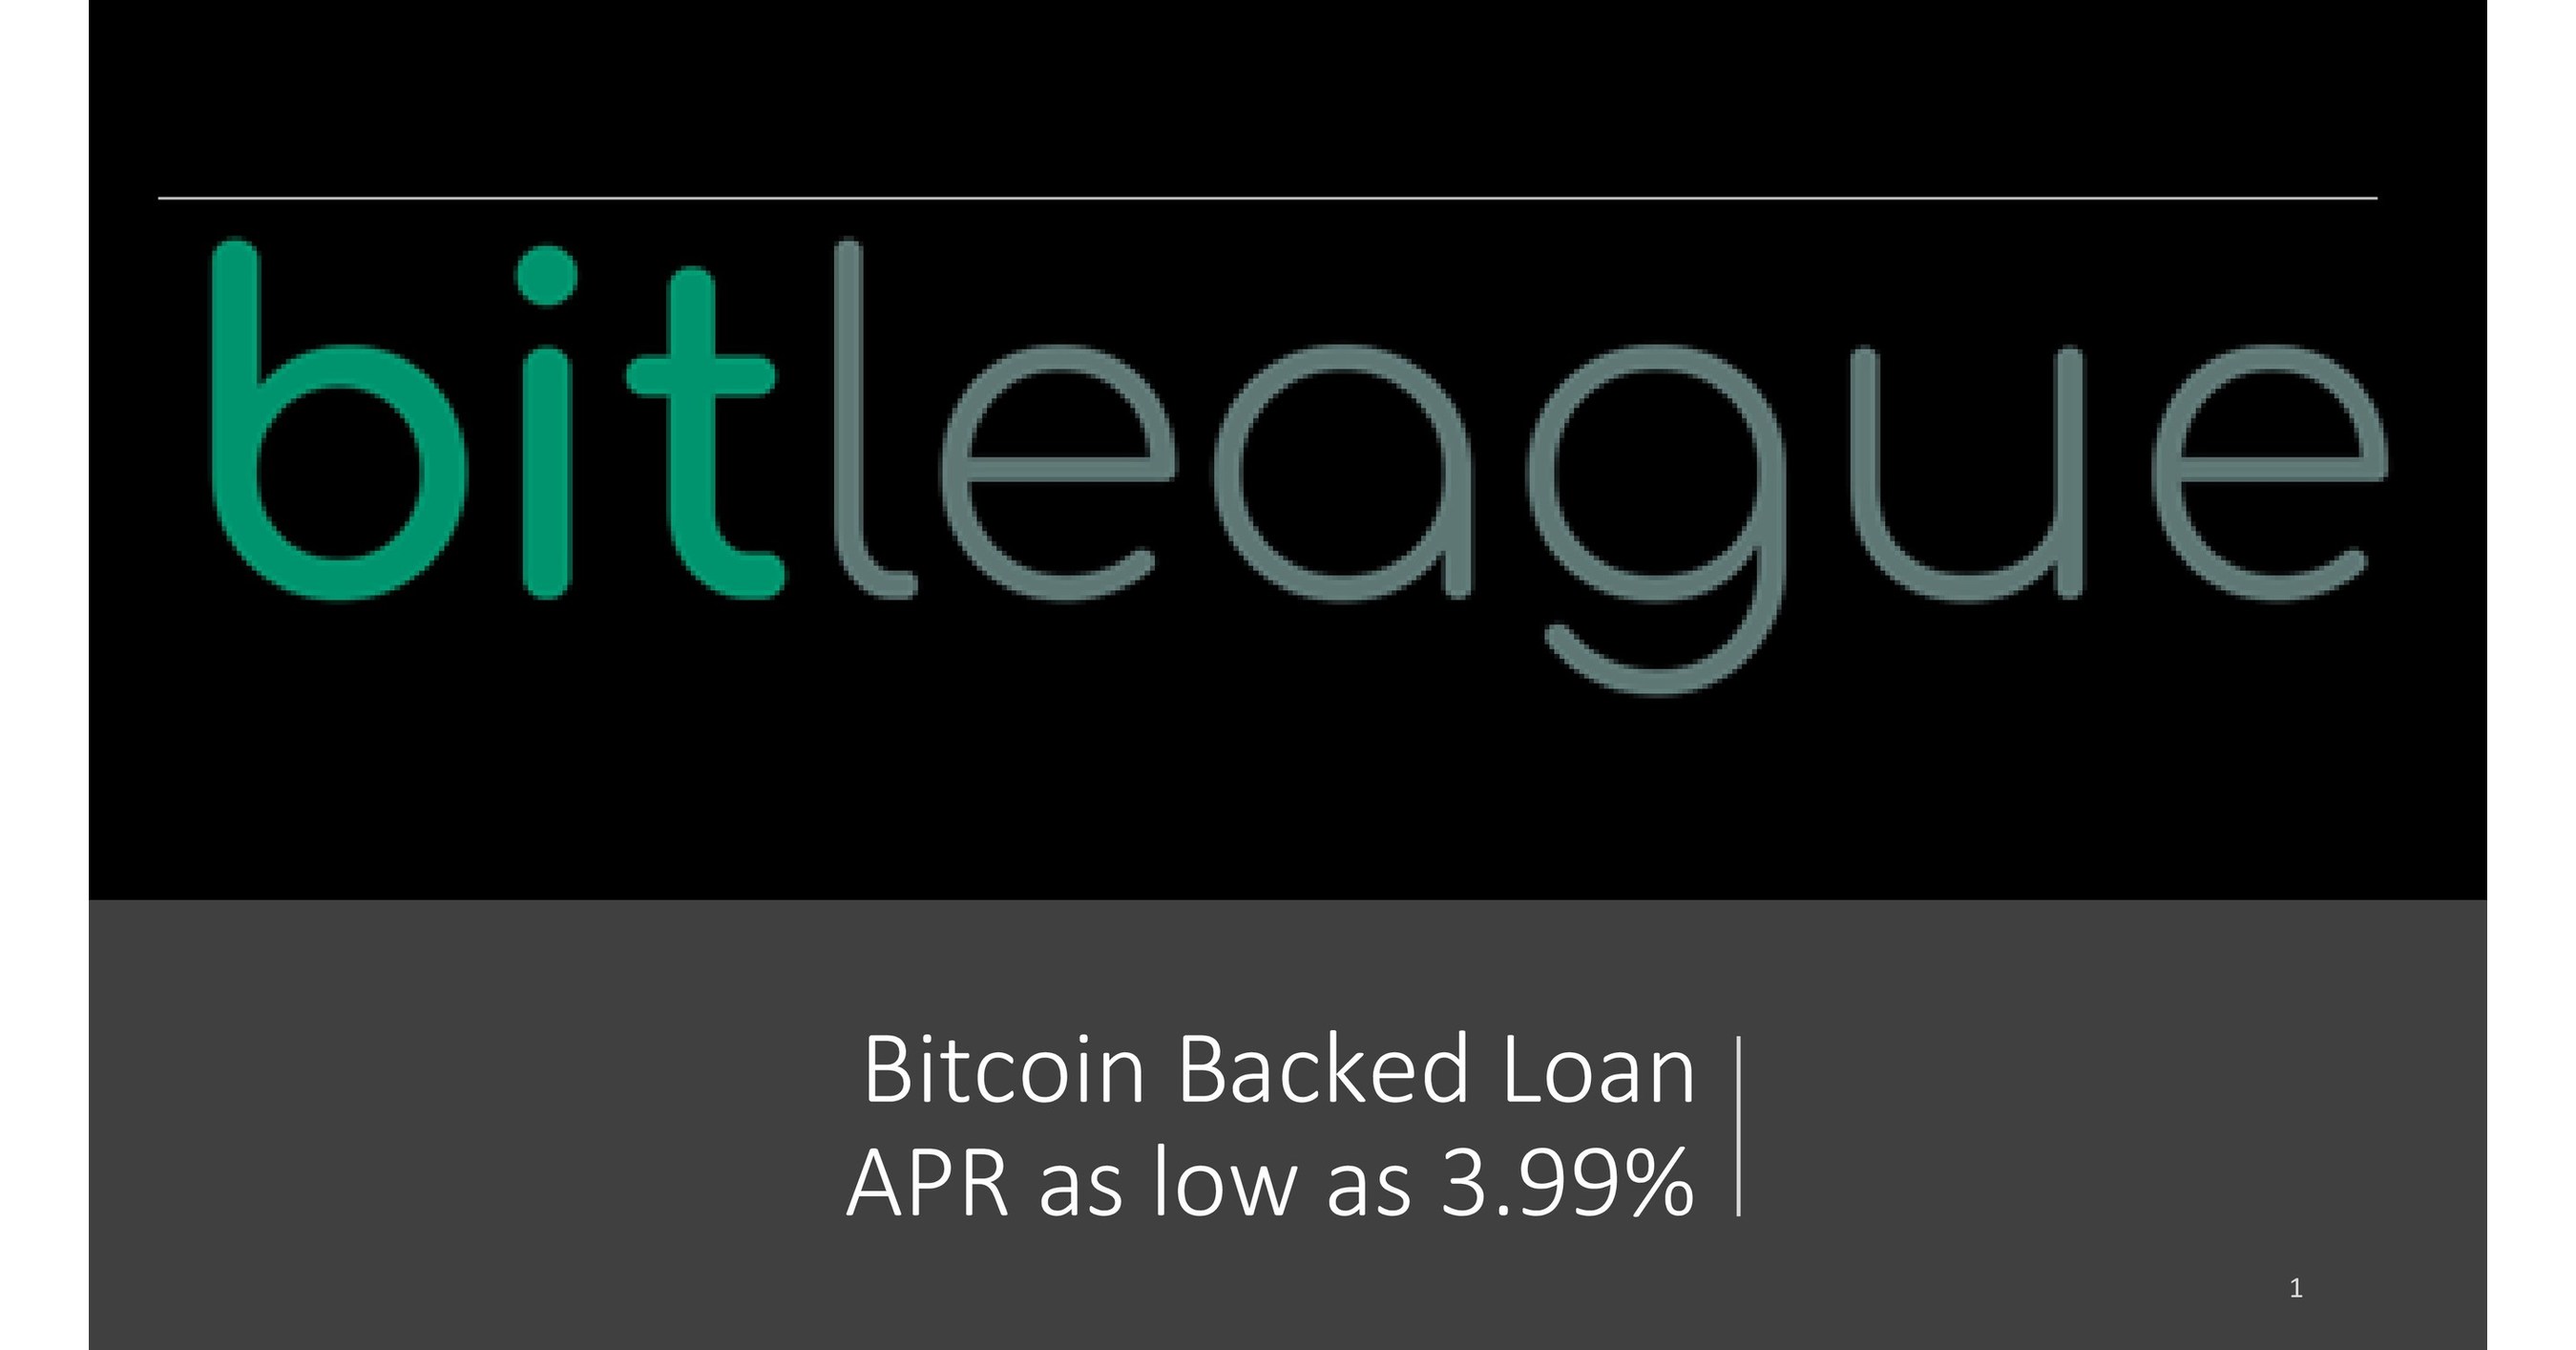 bitcoin league limited